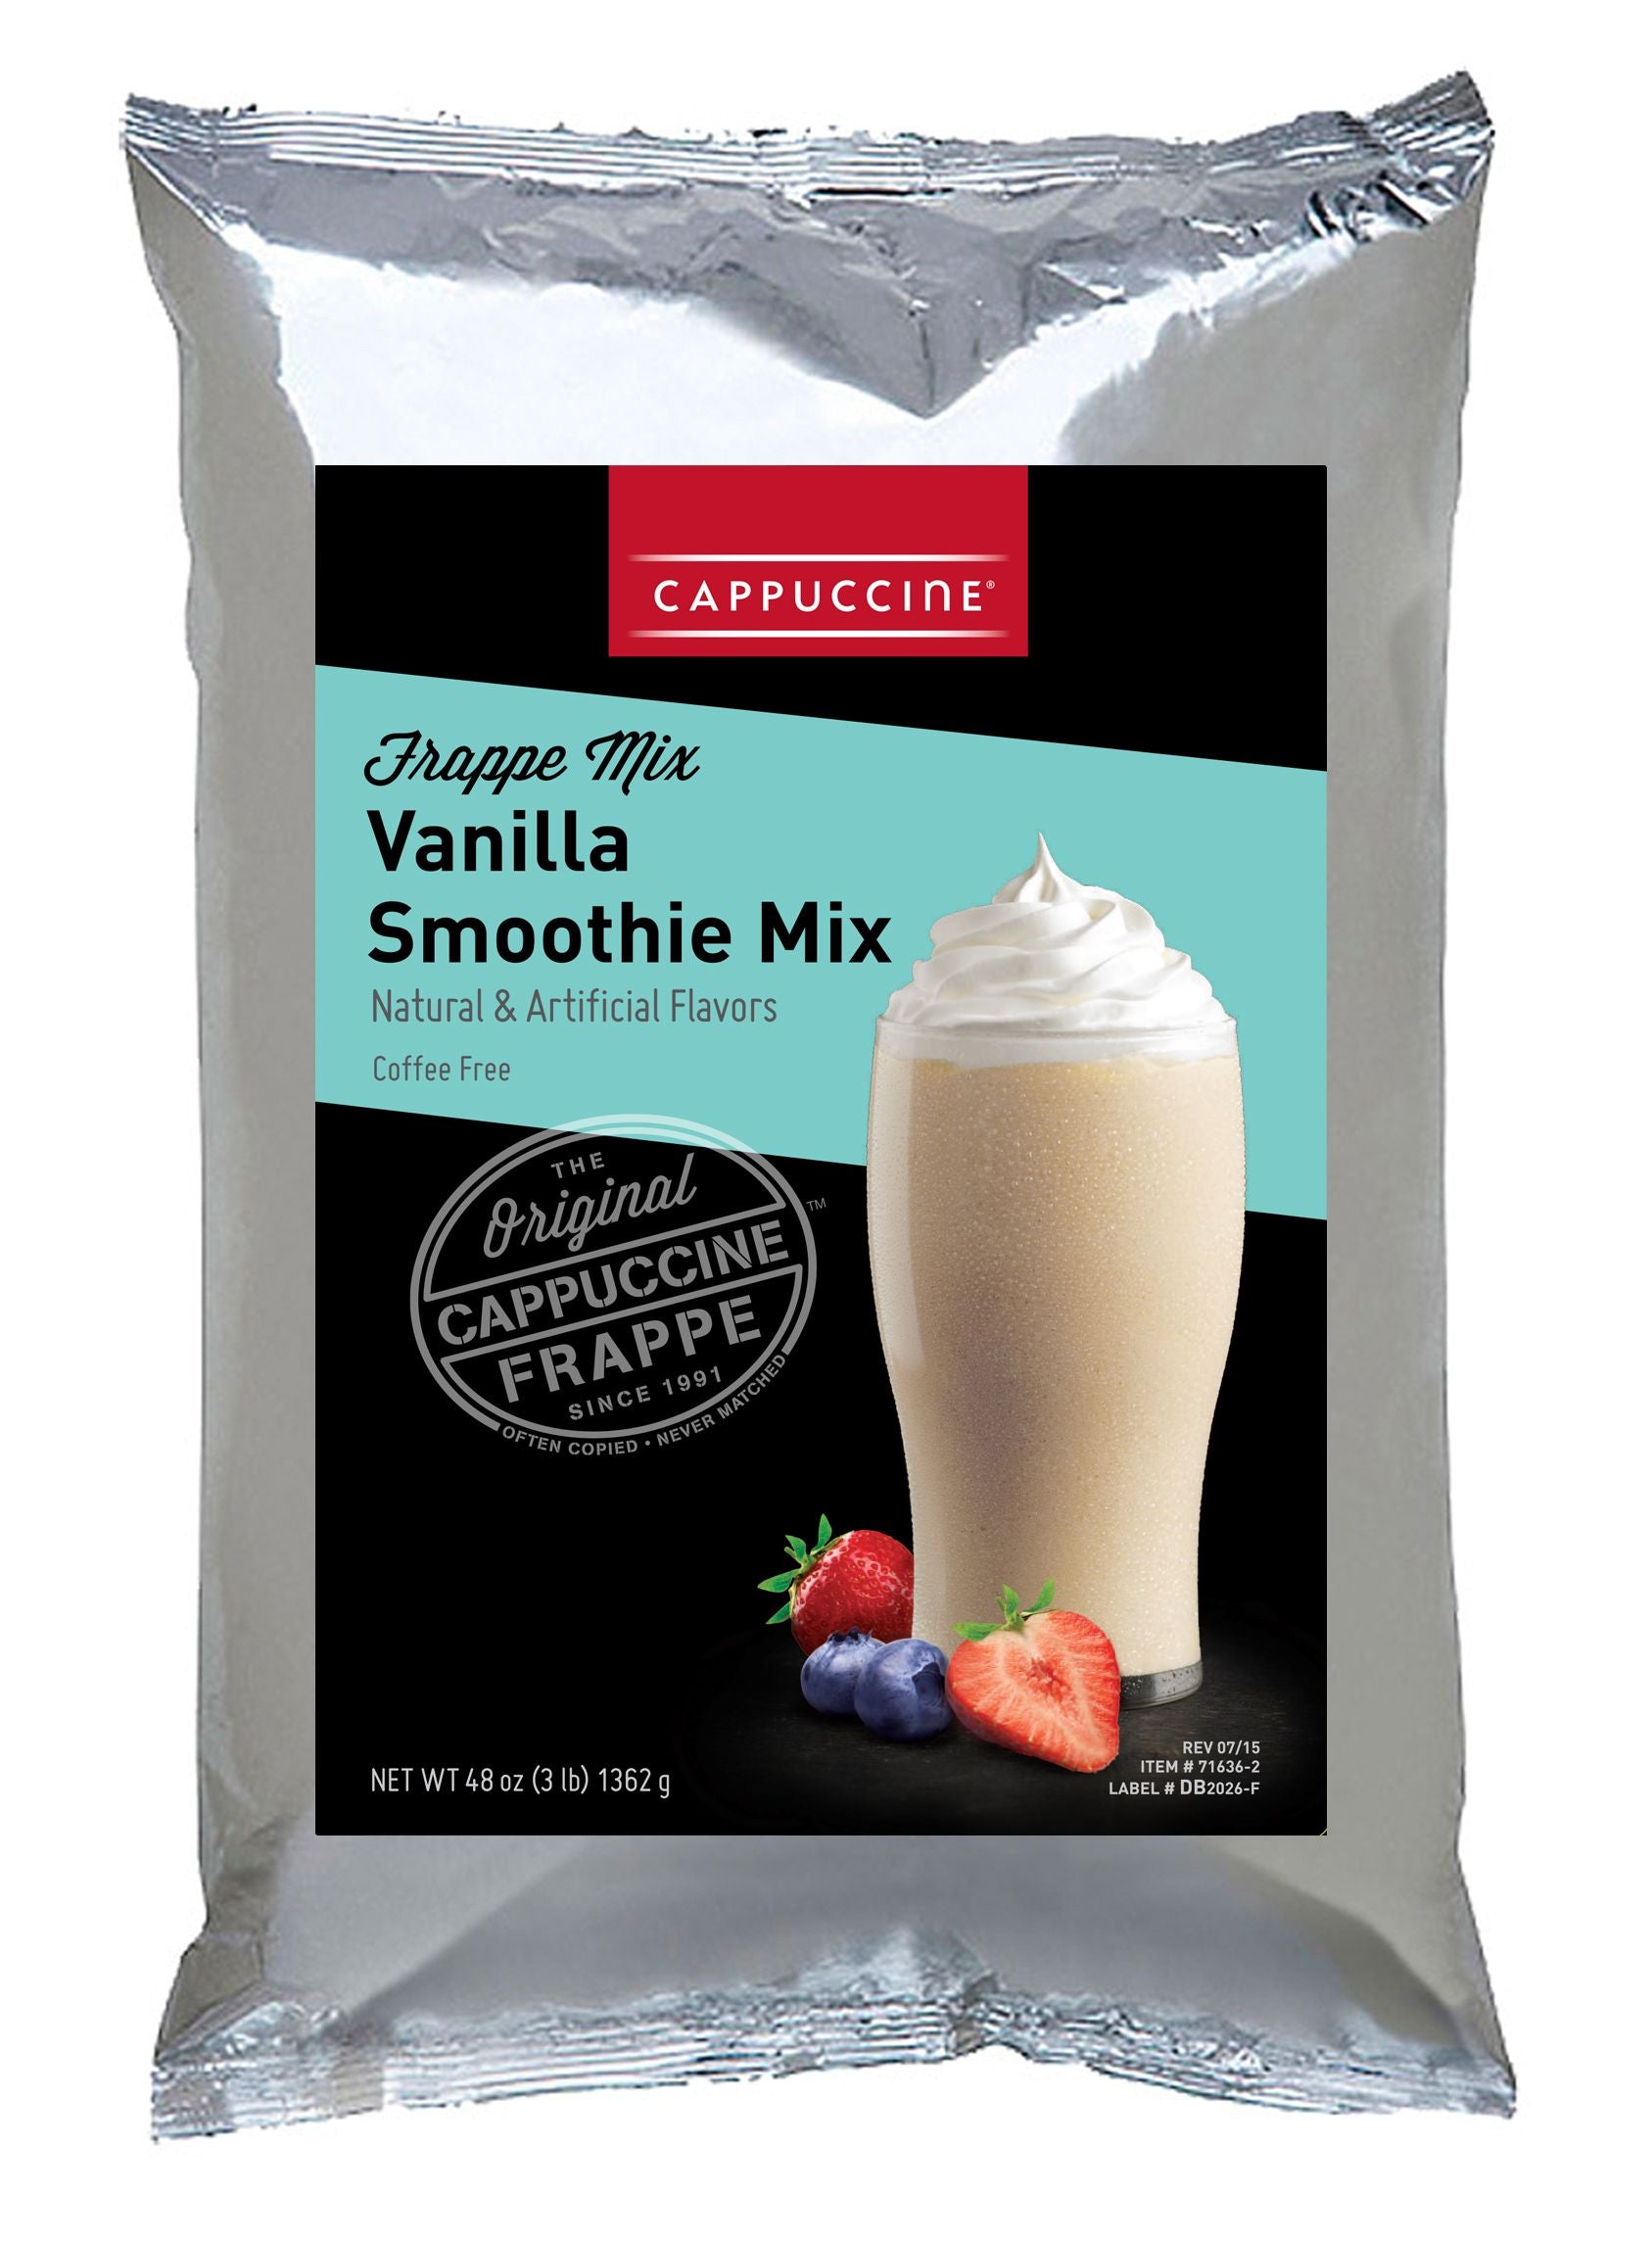 Cappuccine Frappe Mix - 3 lb. Bulk Bag: Vanilla Smoothie Mix